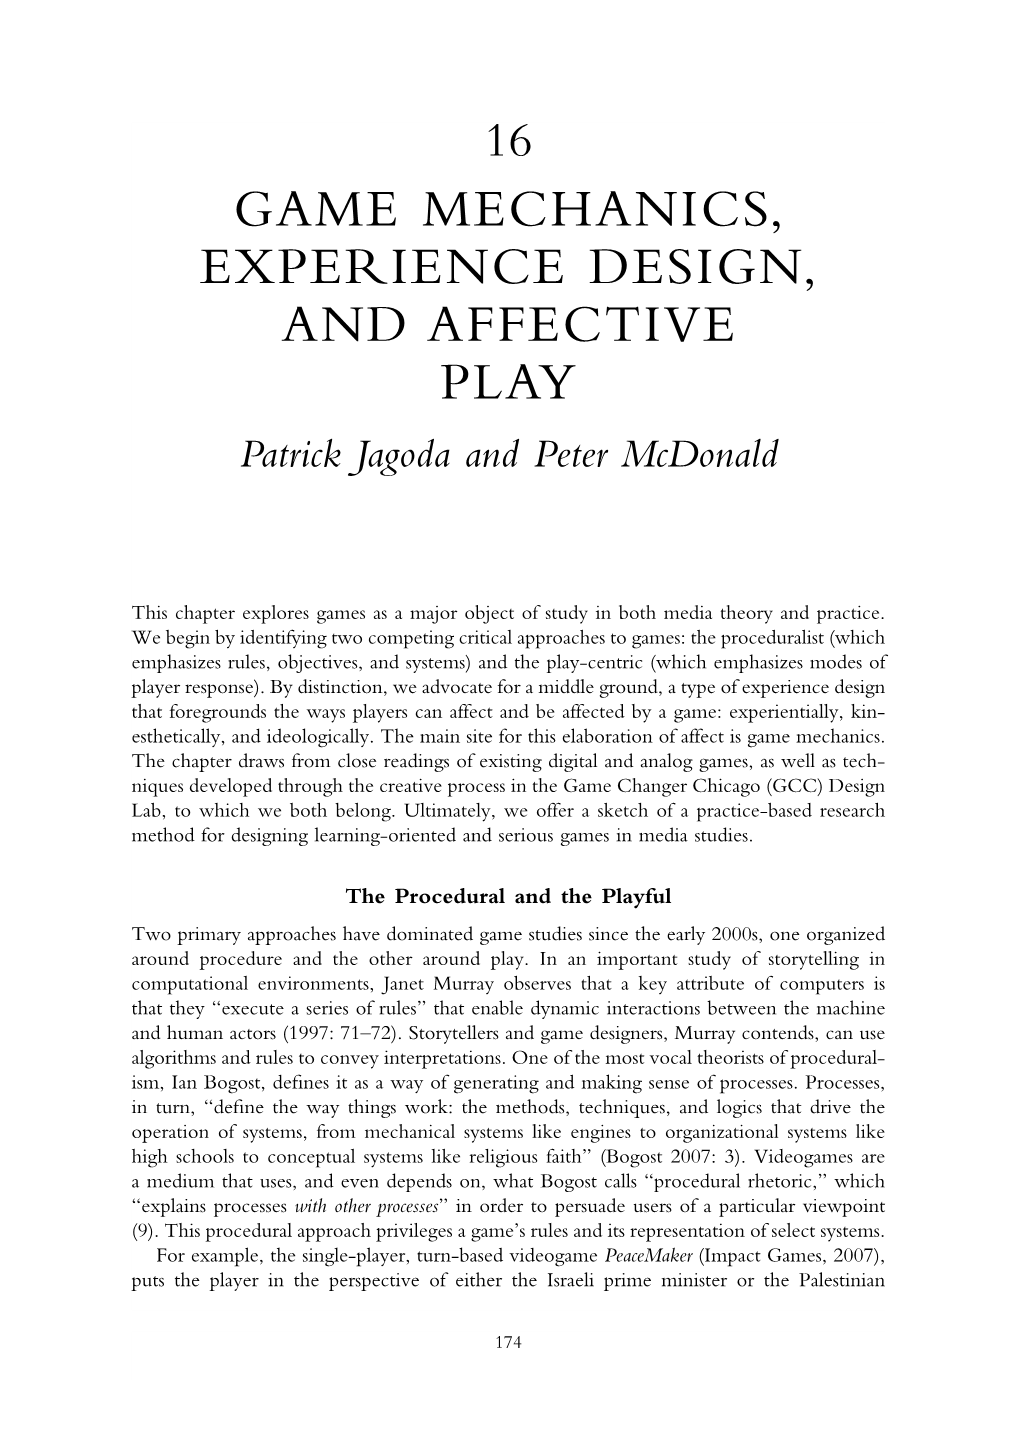 GAME MECHANICS, EXPERIENCE DESIGN, and AFFECTIVE PLAY Patrick Jagoda and Peter Mcdonald